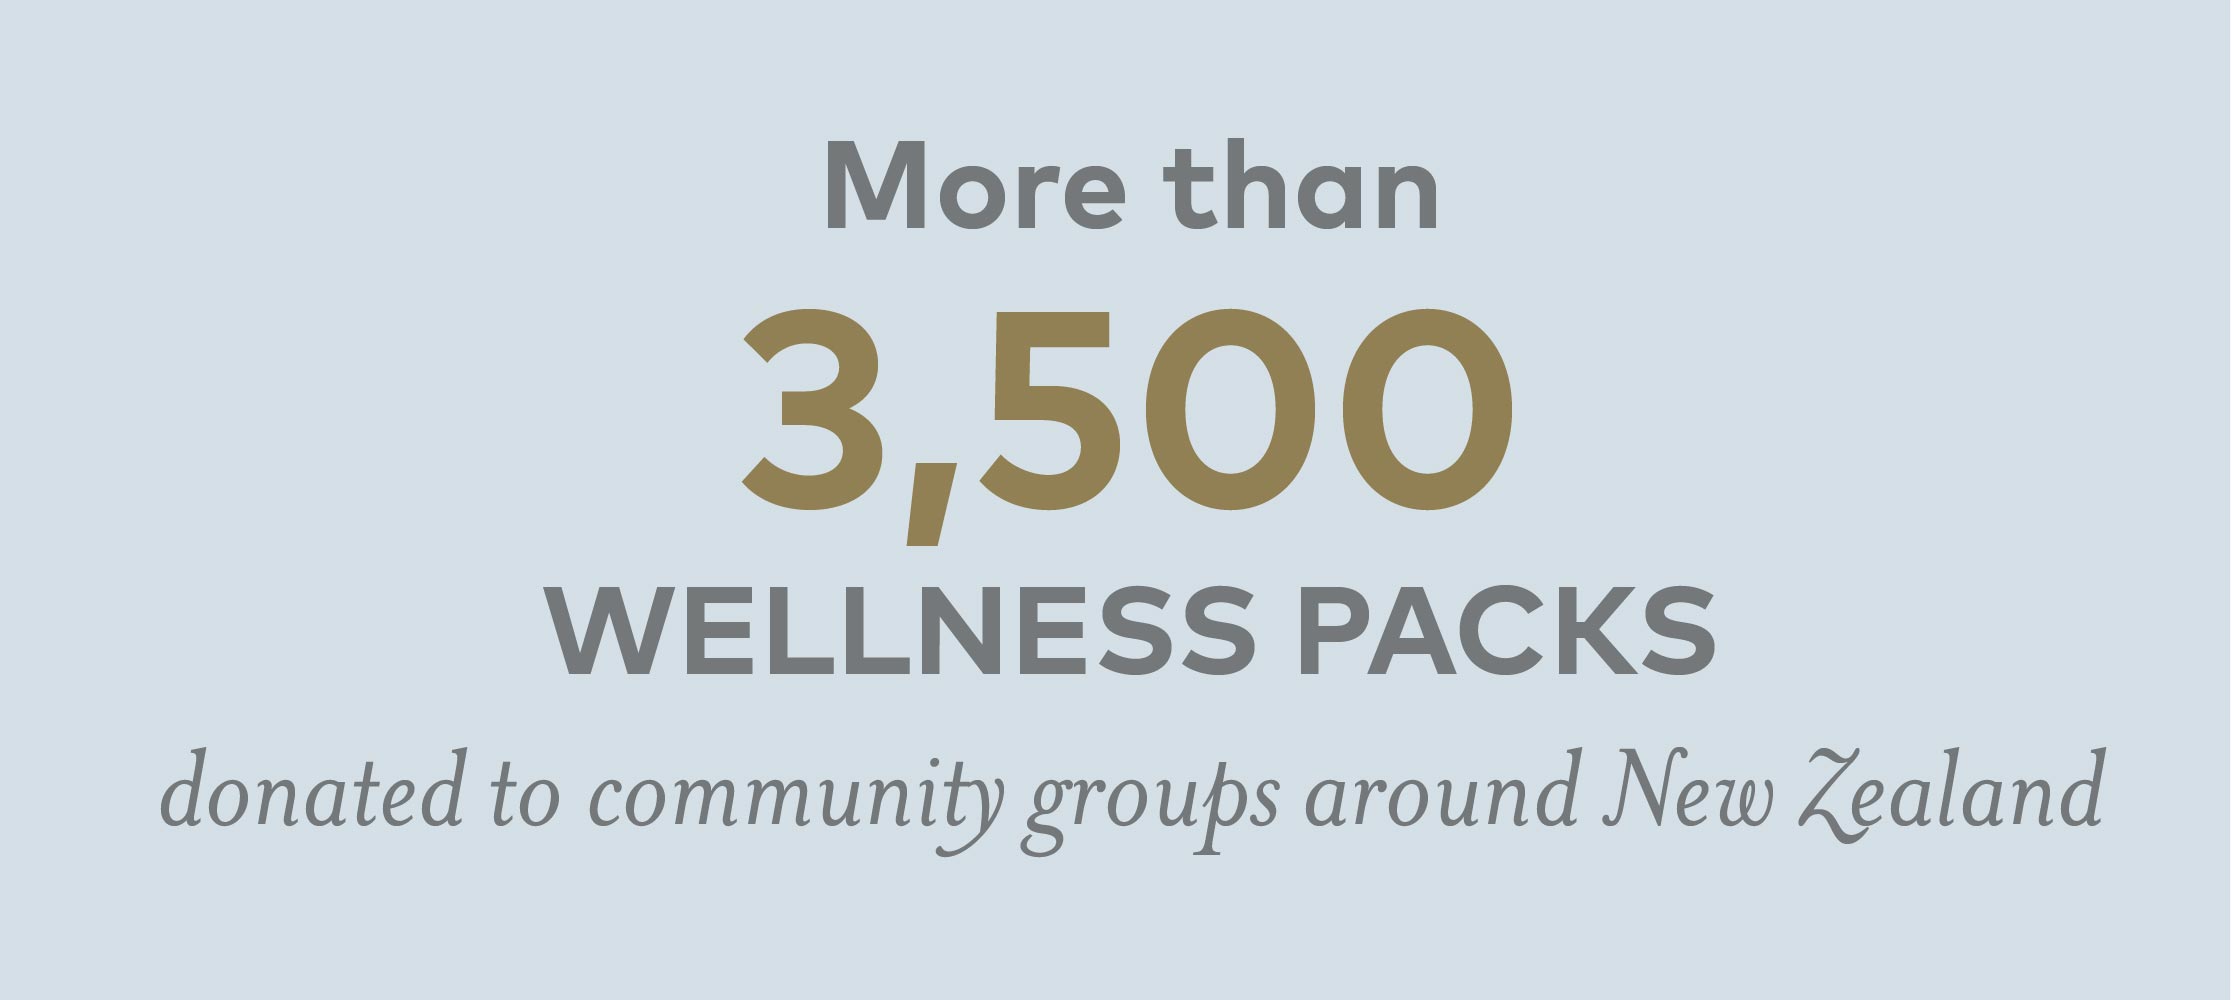 3,500 wellness packs given